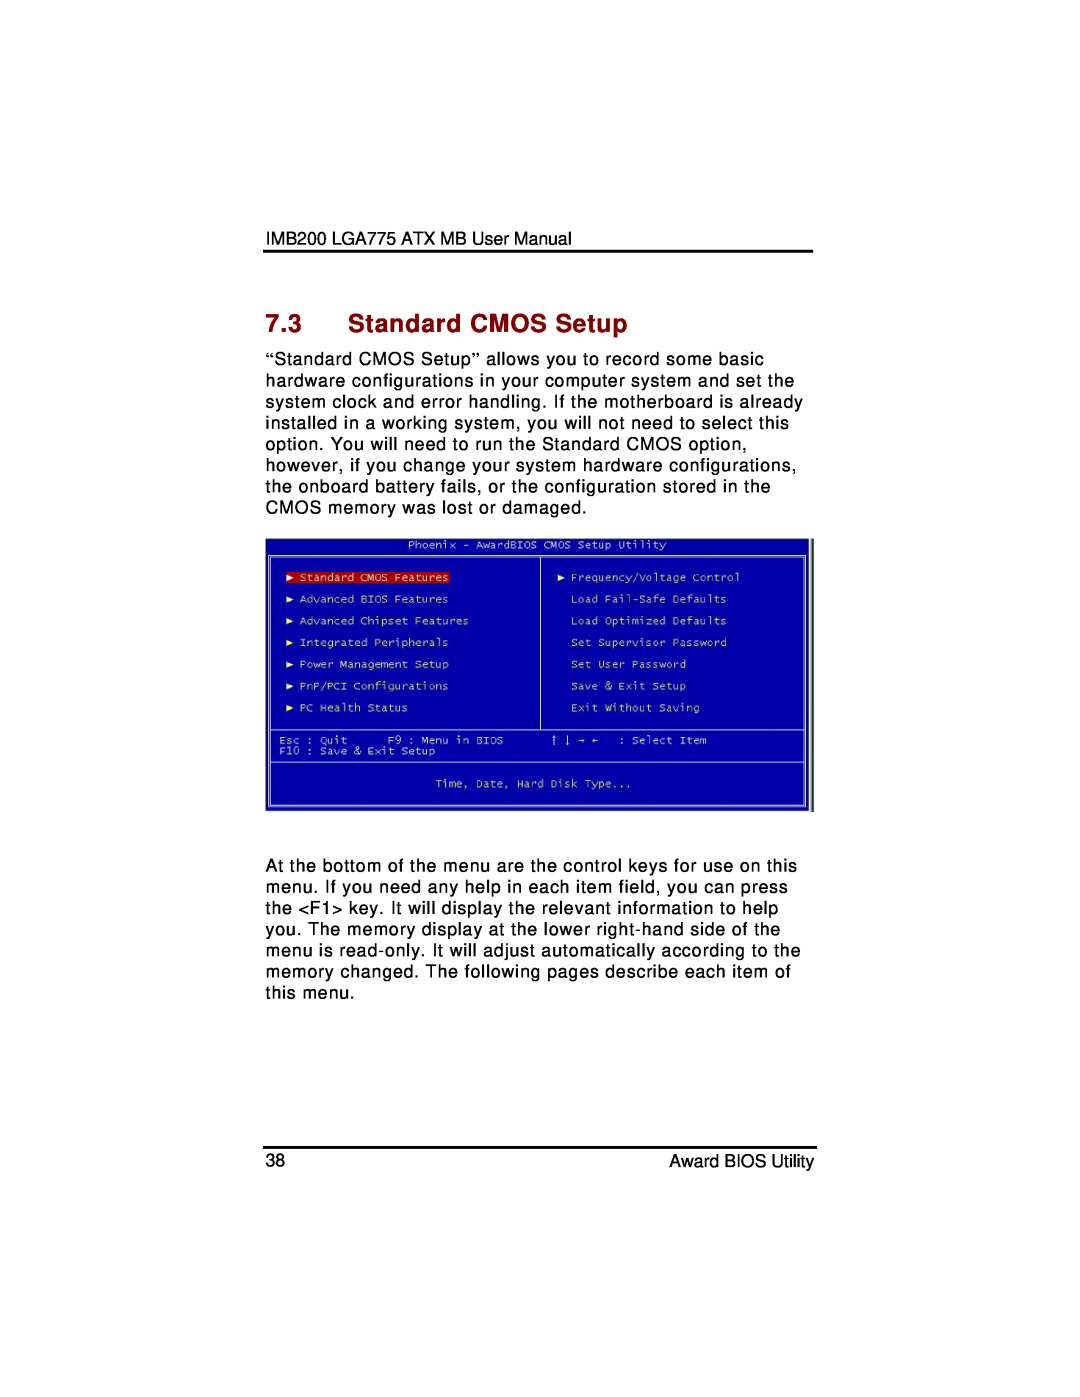 Intel IMB200VGE user manual Standard CMOS Setup 